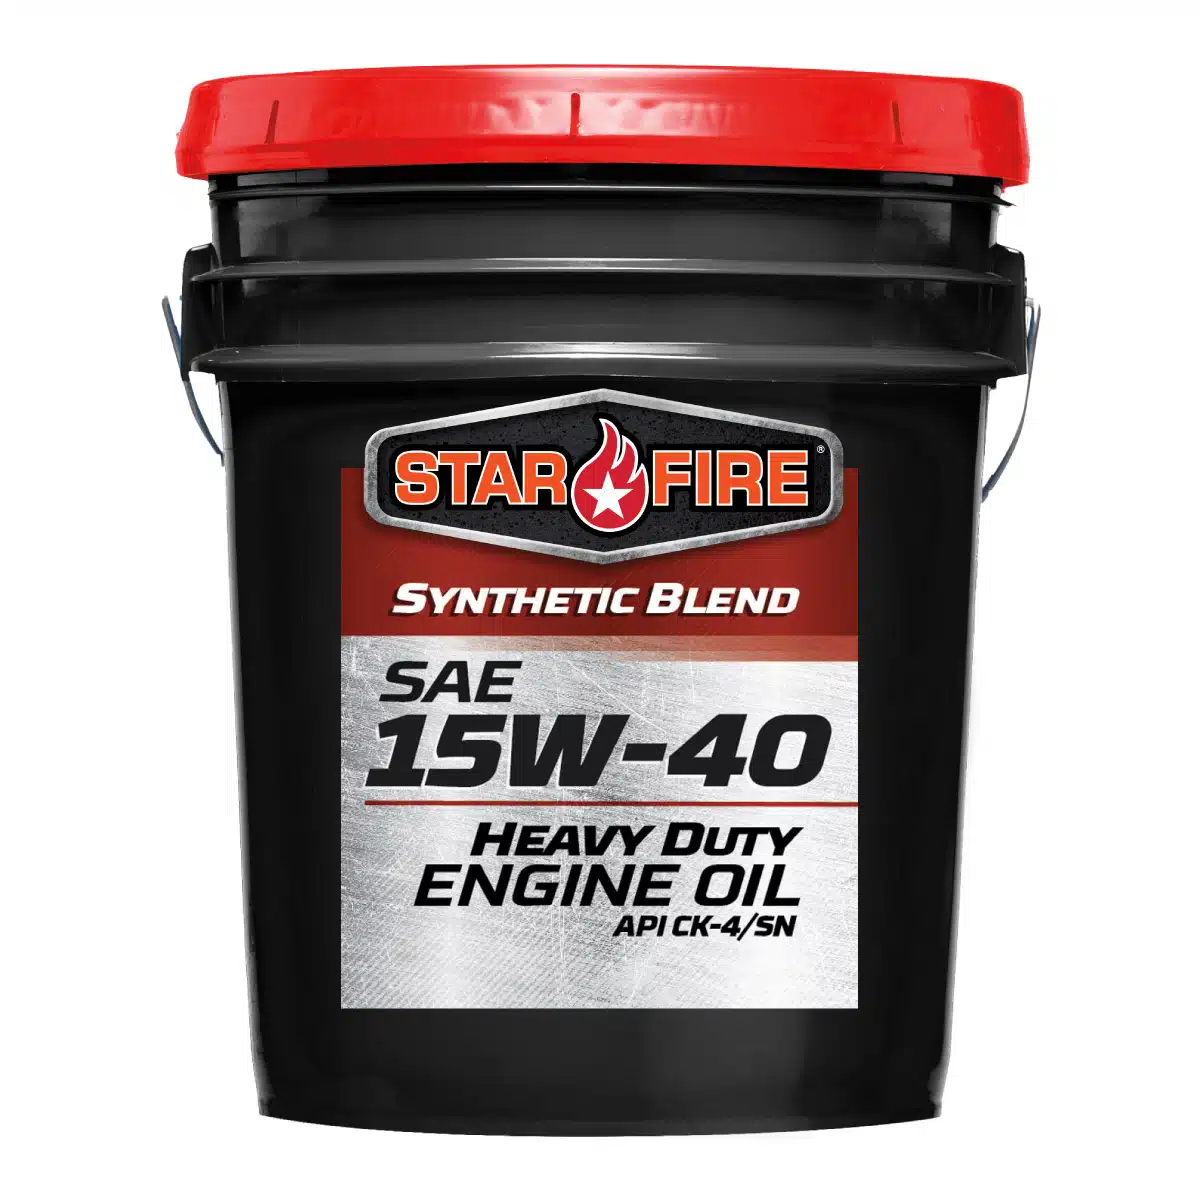 5 Gallon Synthetic Blend Heavy Duty Engine Oil 15w-40